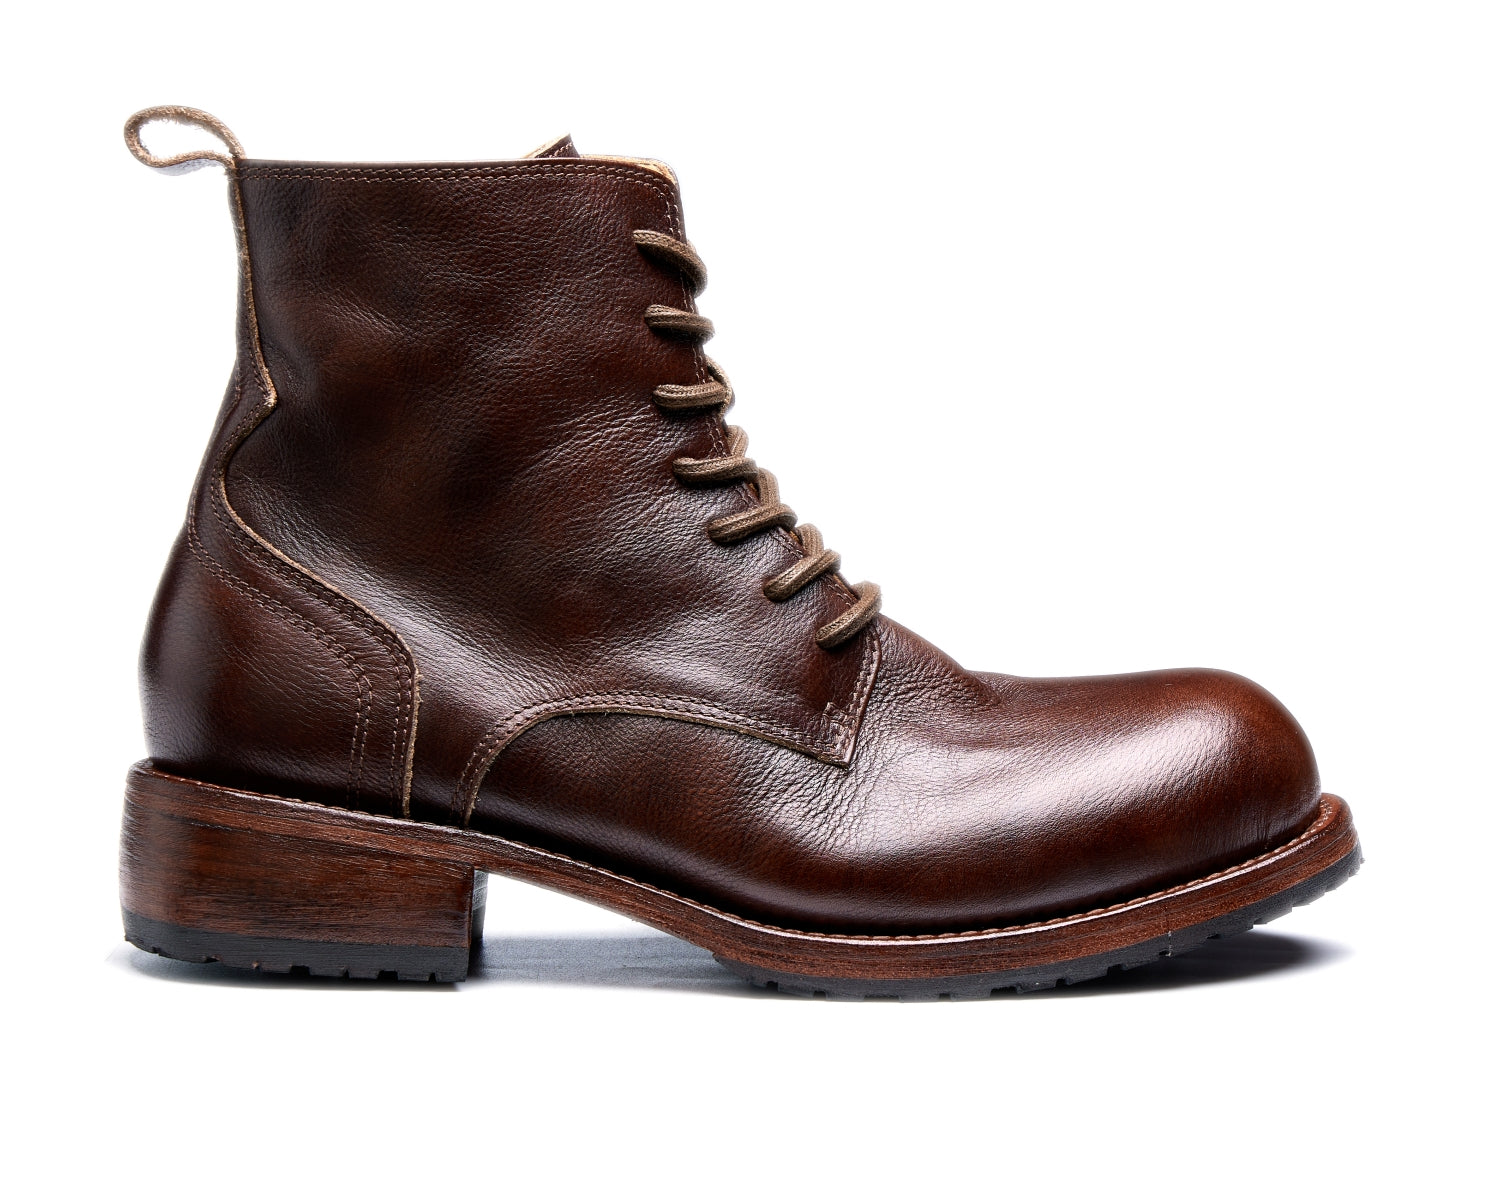 Men's Goodyear welt horsehide full-grain leather washed marten boots11